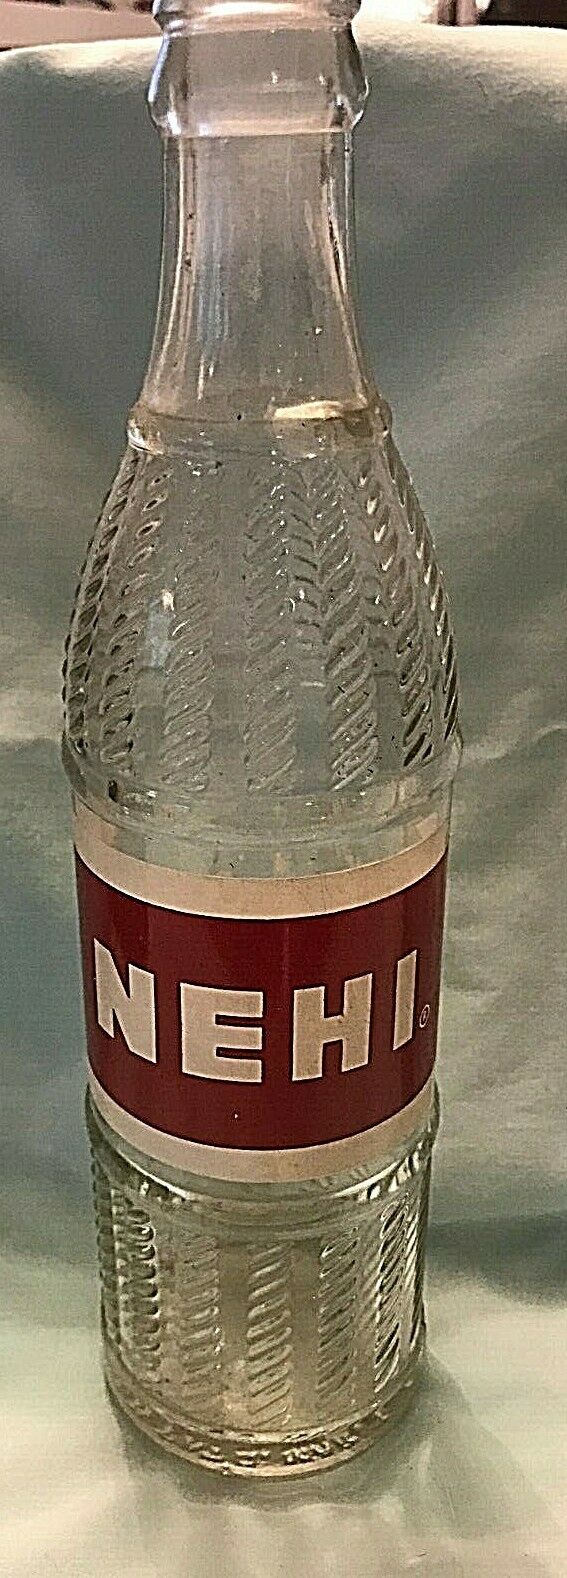 NEHI  clear glass bottle 12 fluid ounces